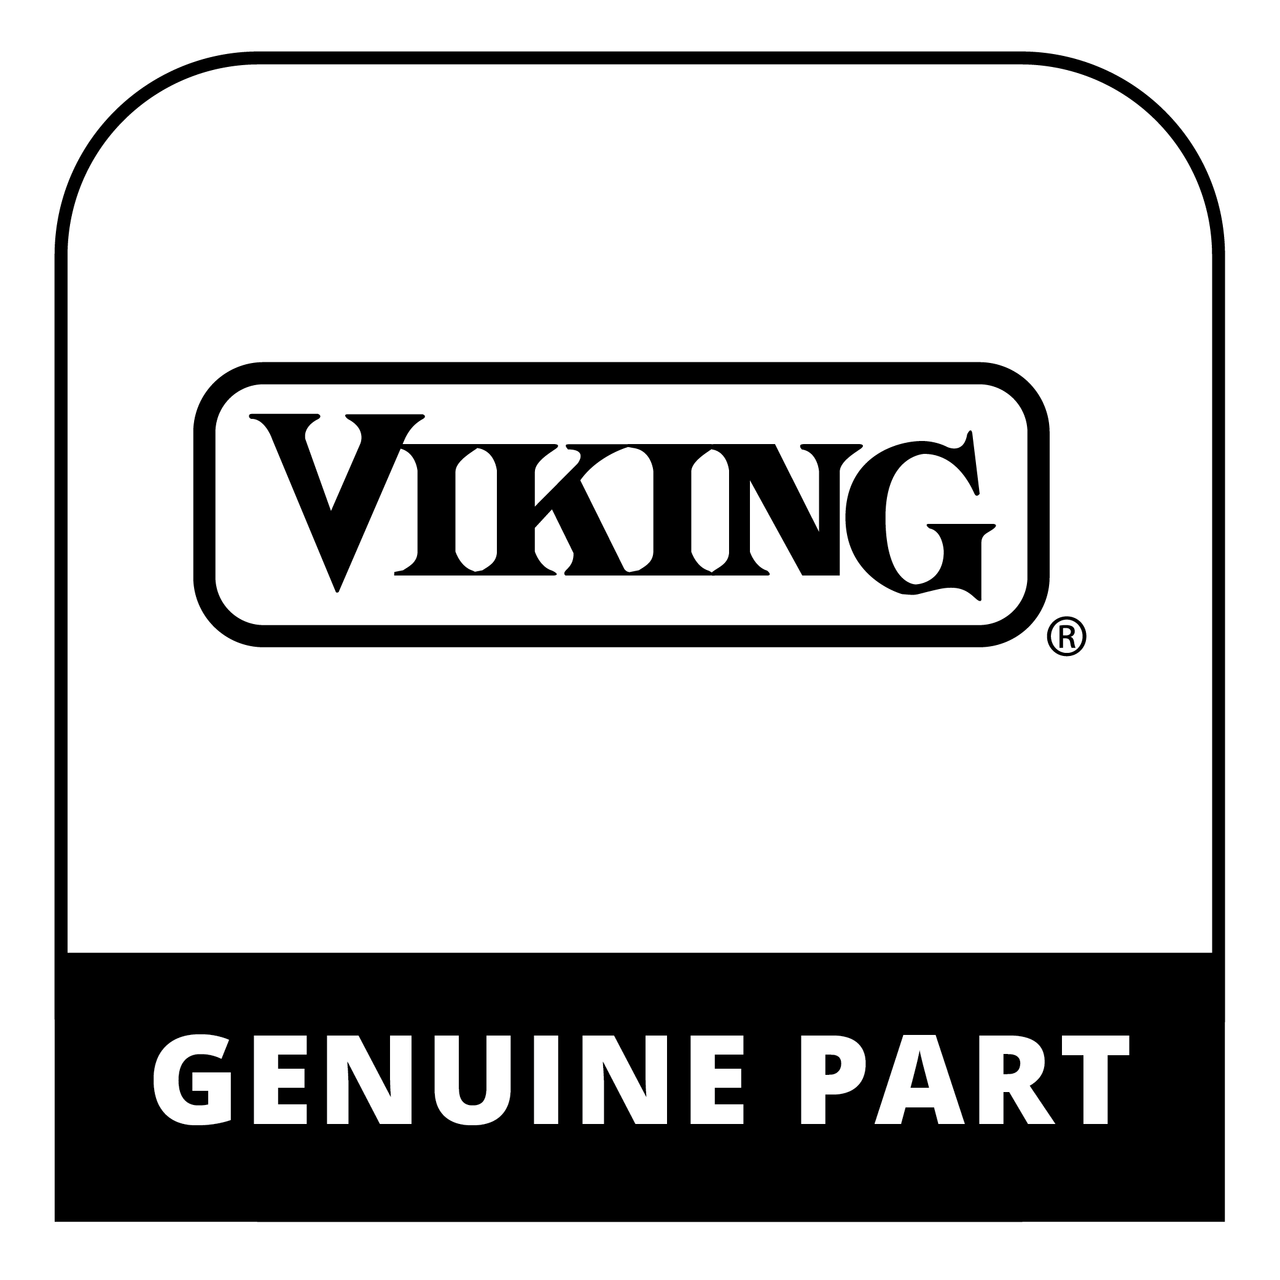 Viking PS500017FGBR - 30" PRO DOOR SKIN SERVICE KIT - Genuine Viking Part